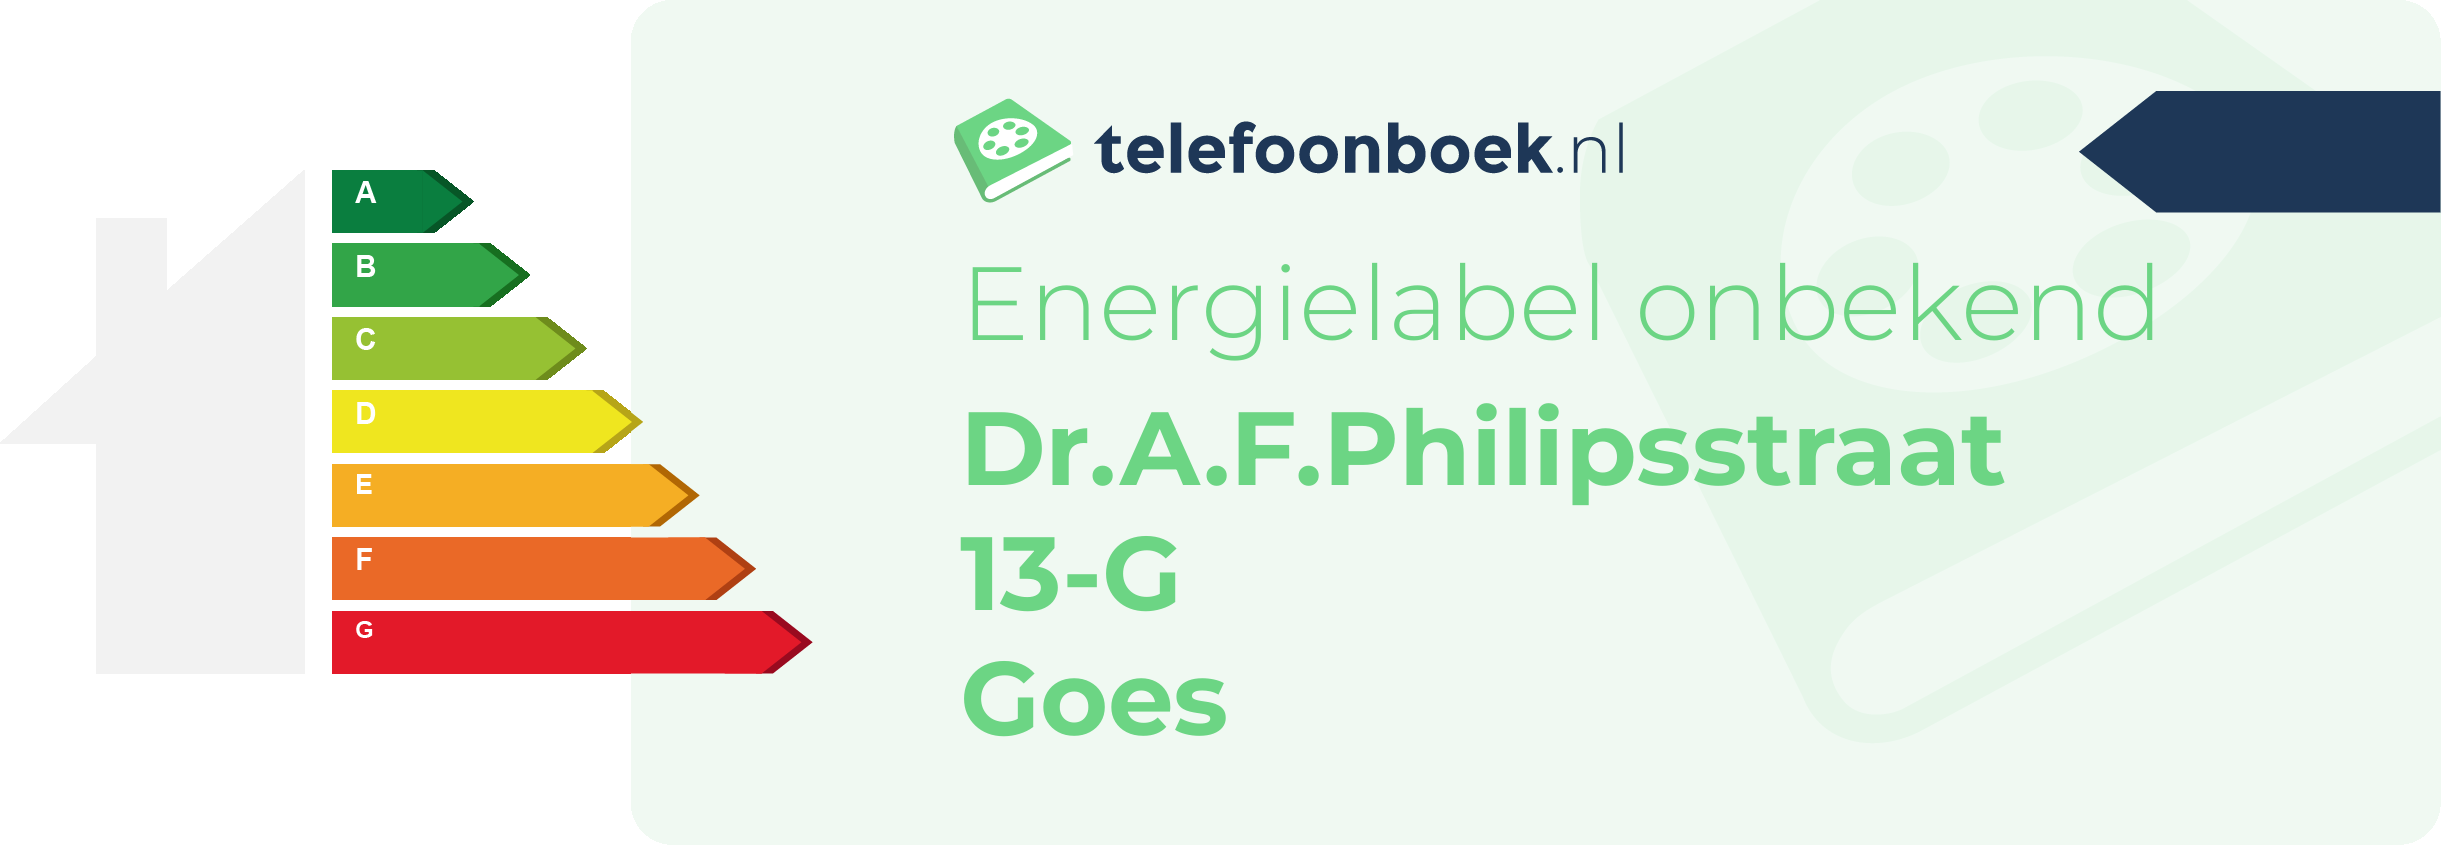 Energielabel Dr.A.F.Philipsstraat 13-G Goes